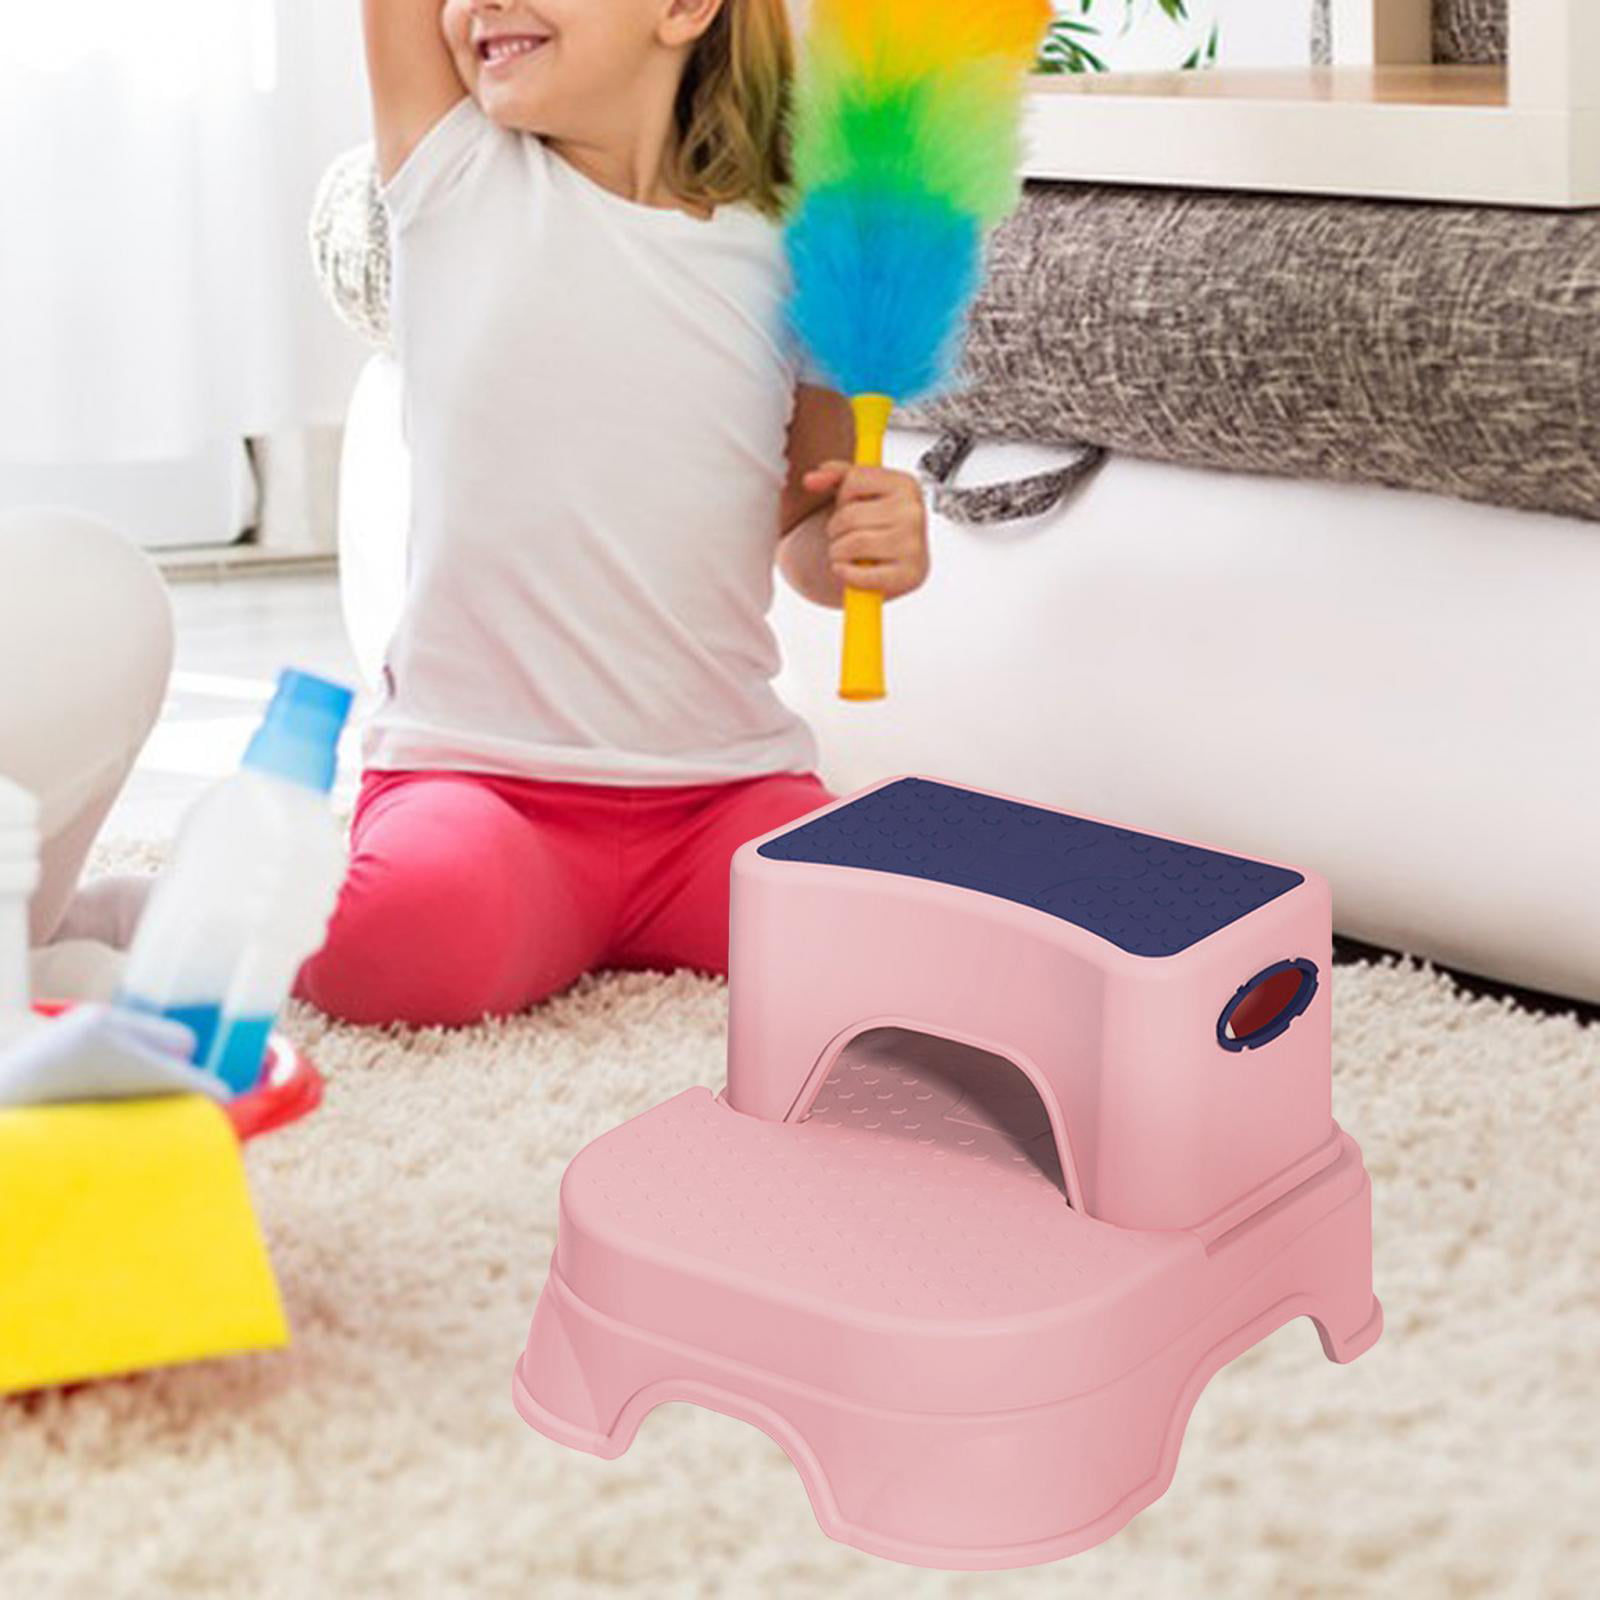 Gazechimp Small Step Stool for Kids Pink Stool for Kitchen Bedroom